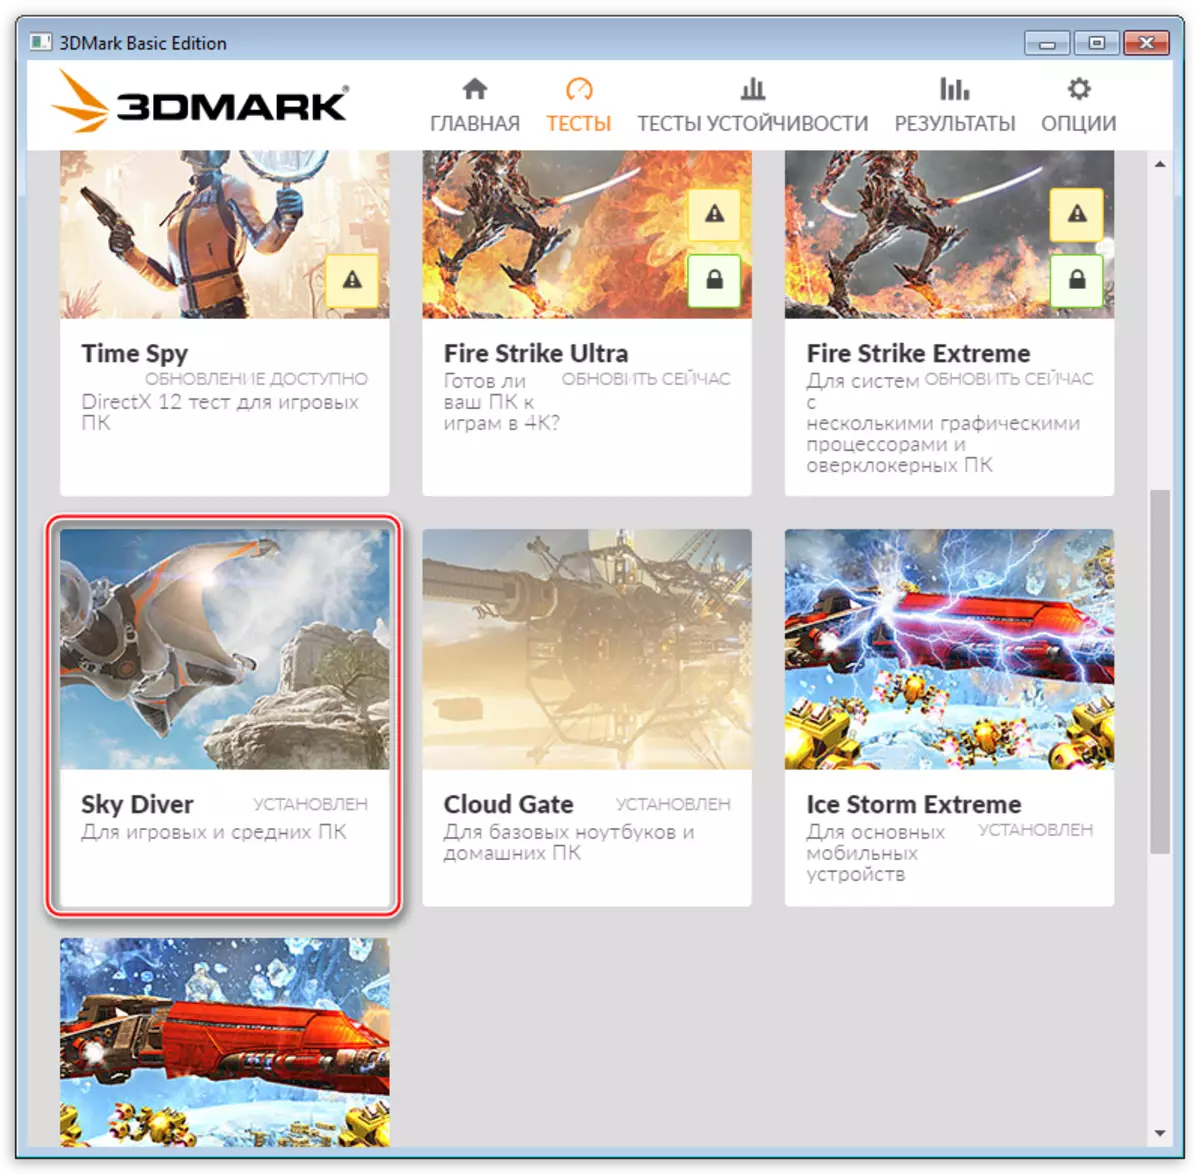 Sky Diver choice test program 3DMark from Futuremark test system developers